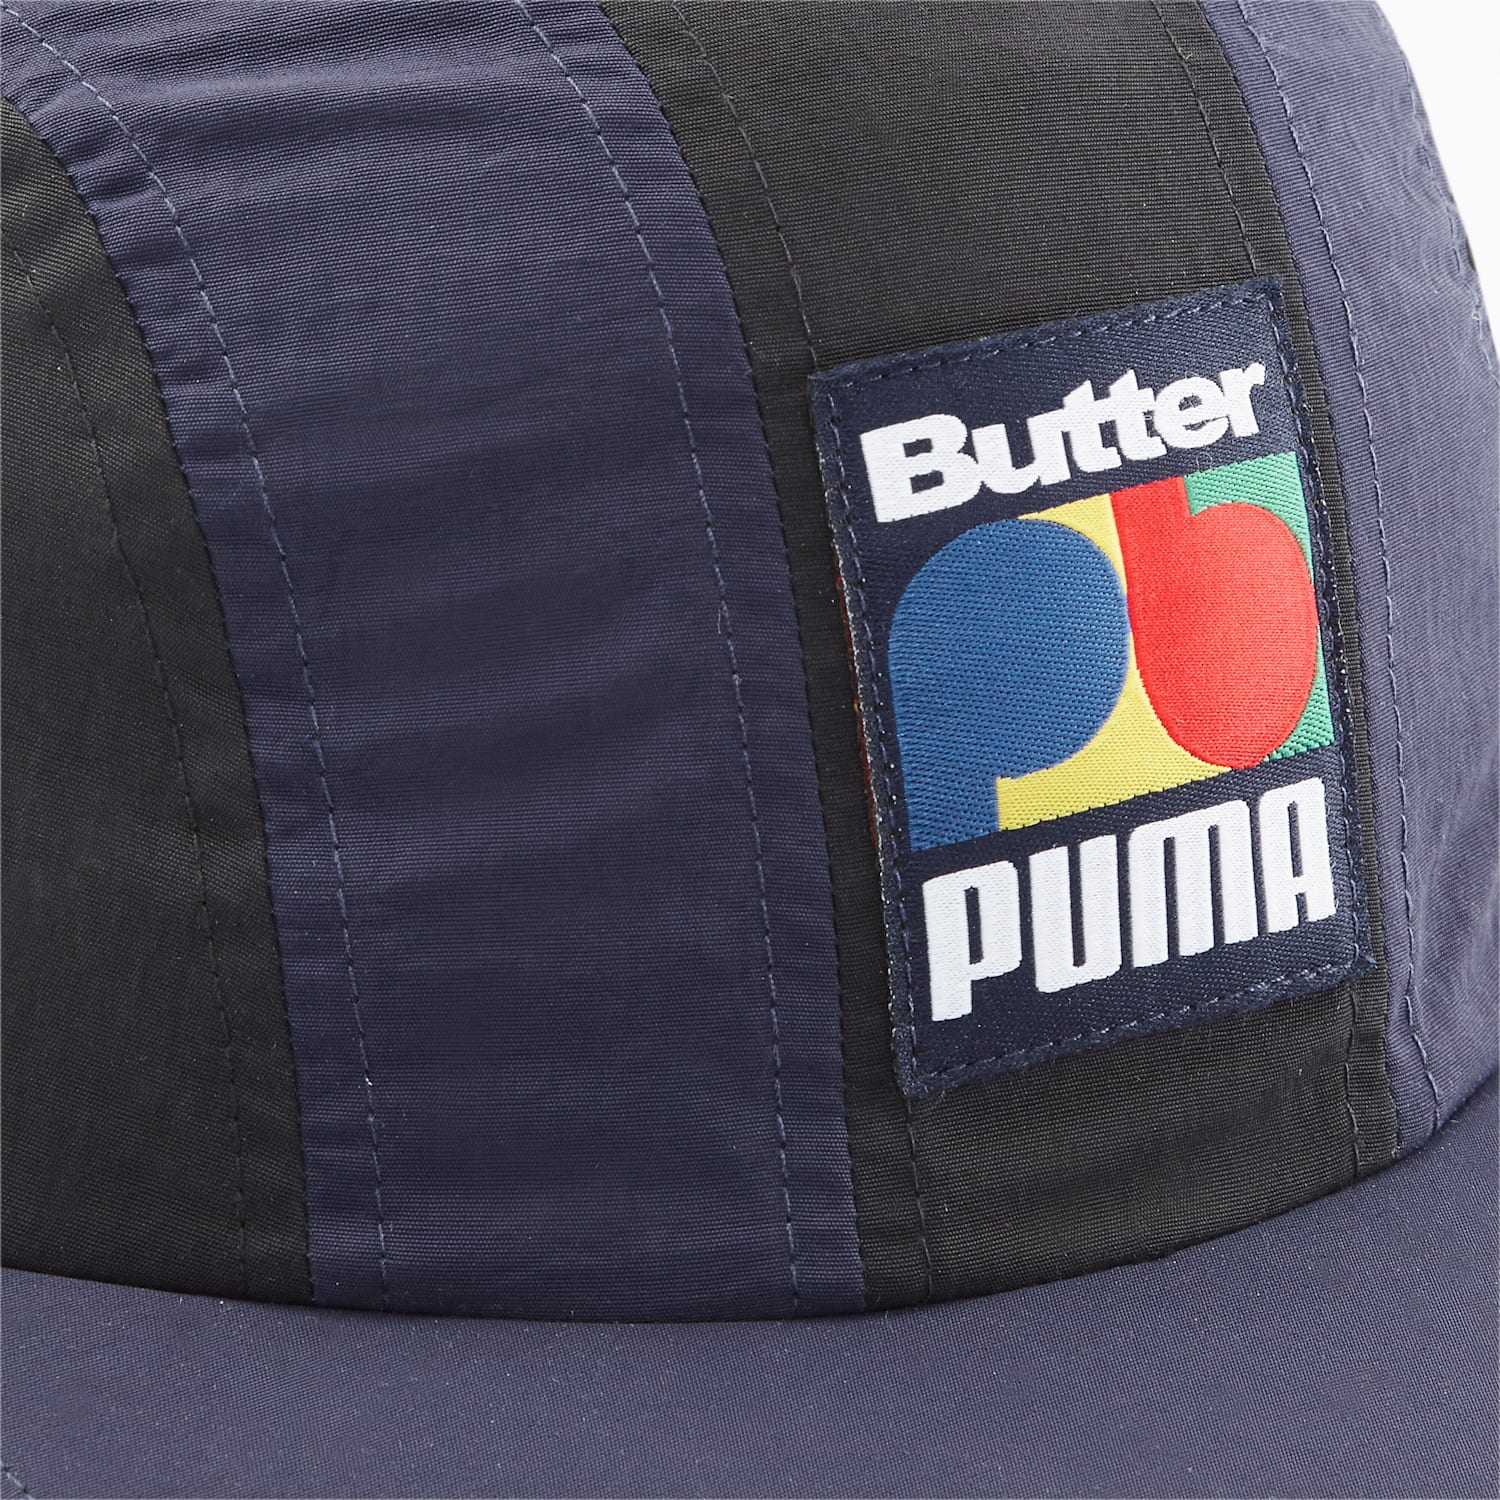 Puma x Butter Goods 5 Panel Cap Peacoat Blue